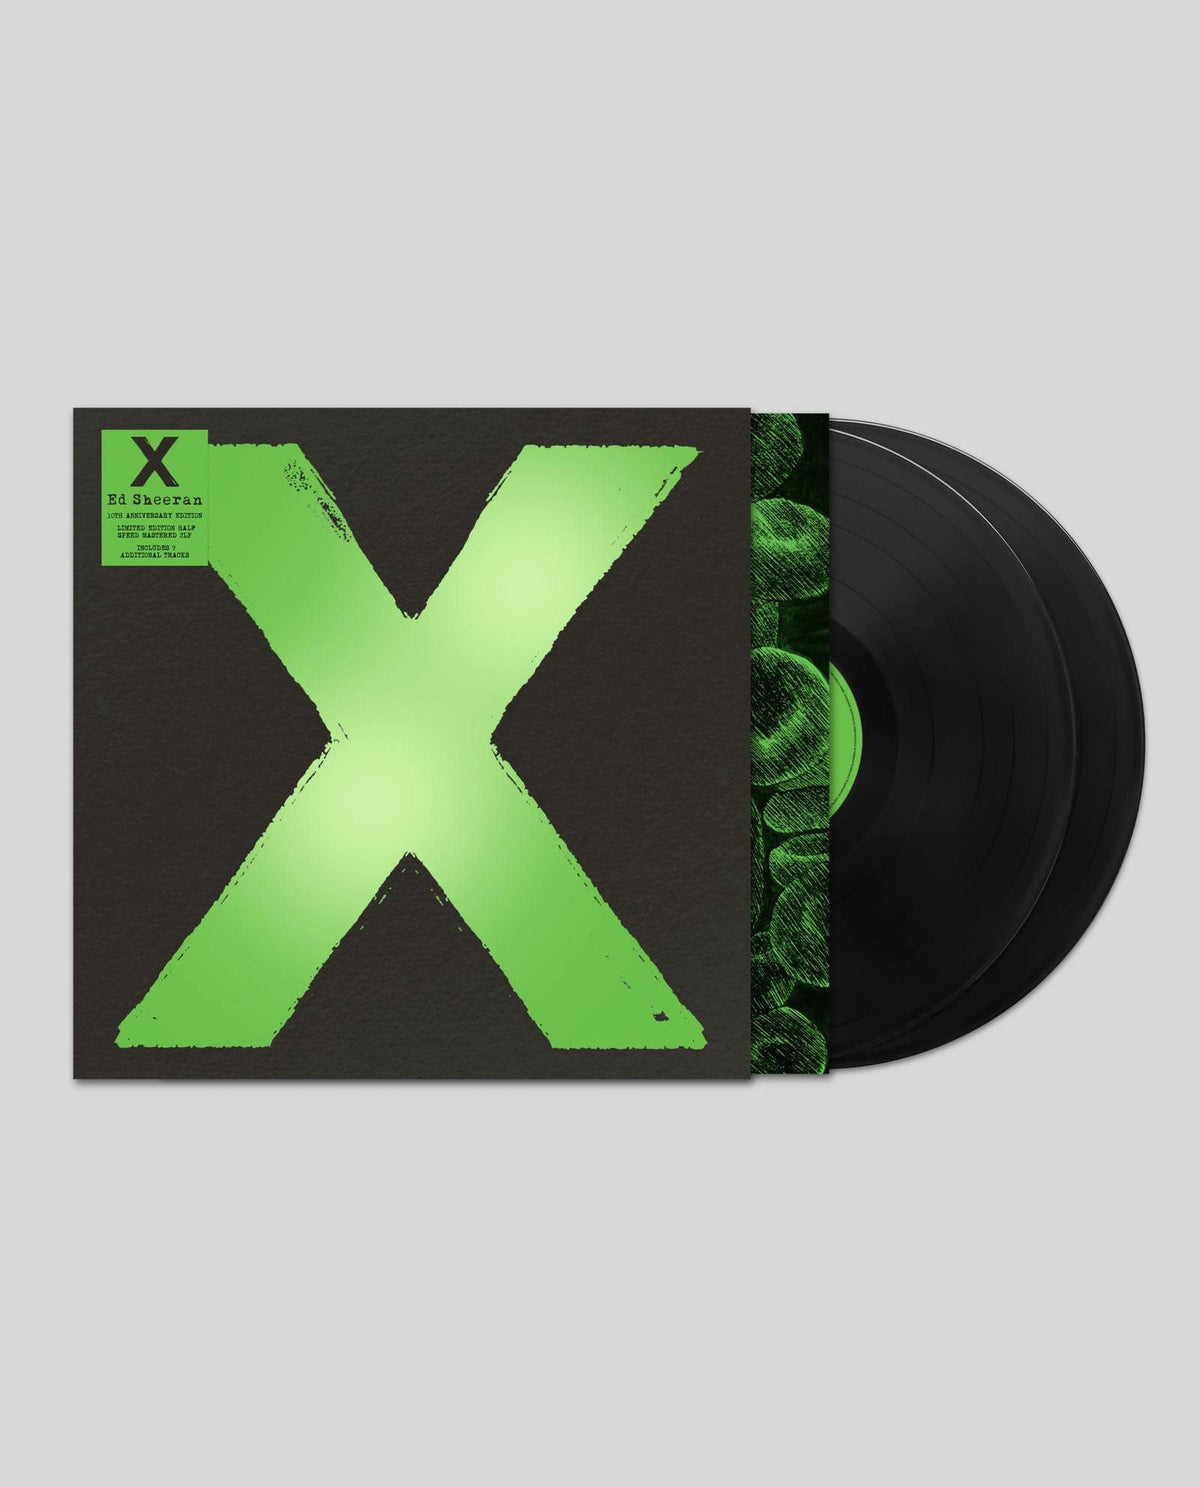 Ed Sheeran - 2LP Vinilo "X" (10th anniversary edition) - D2fy · Rocktud - D2fy